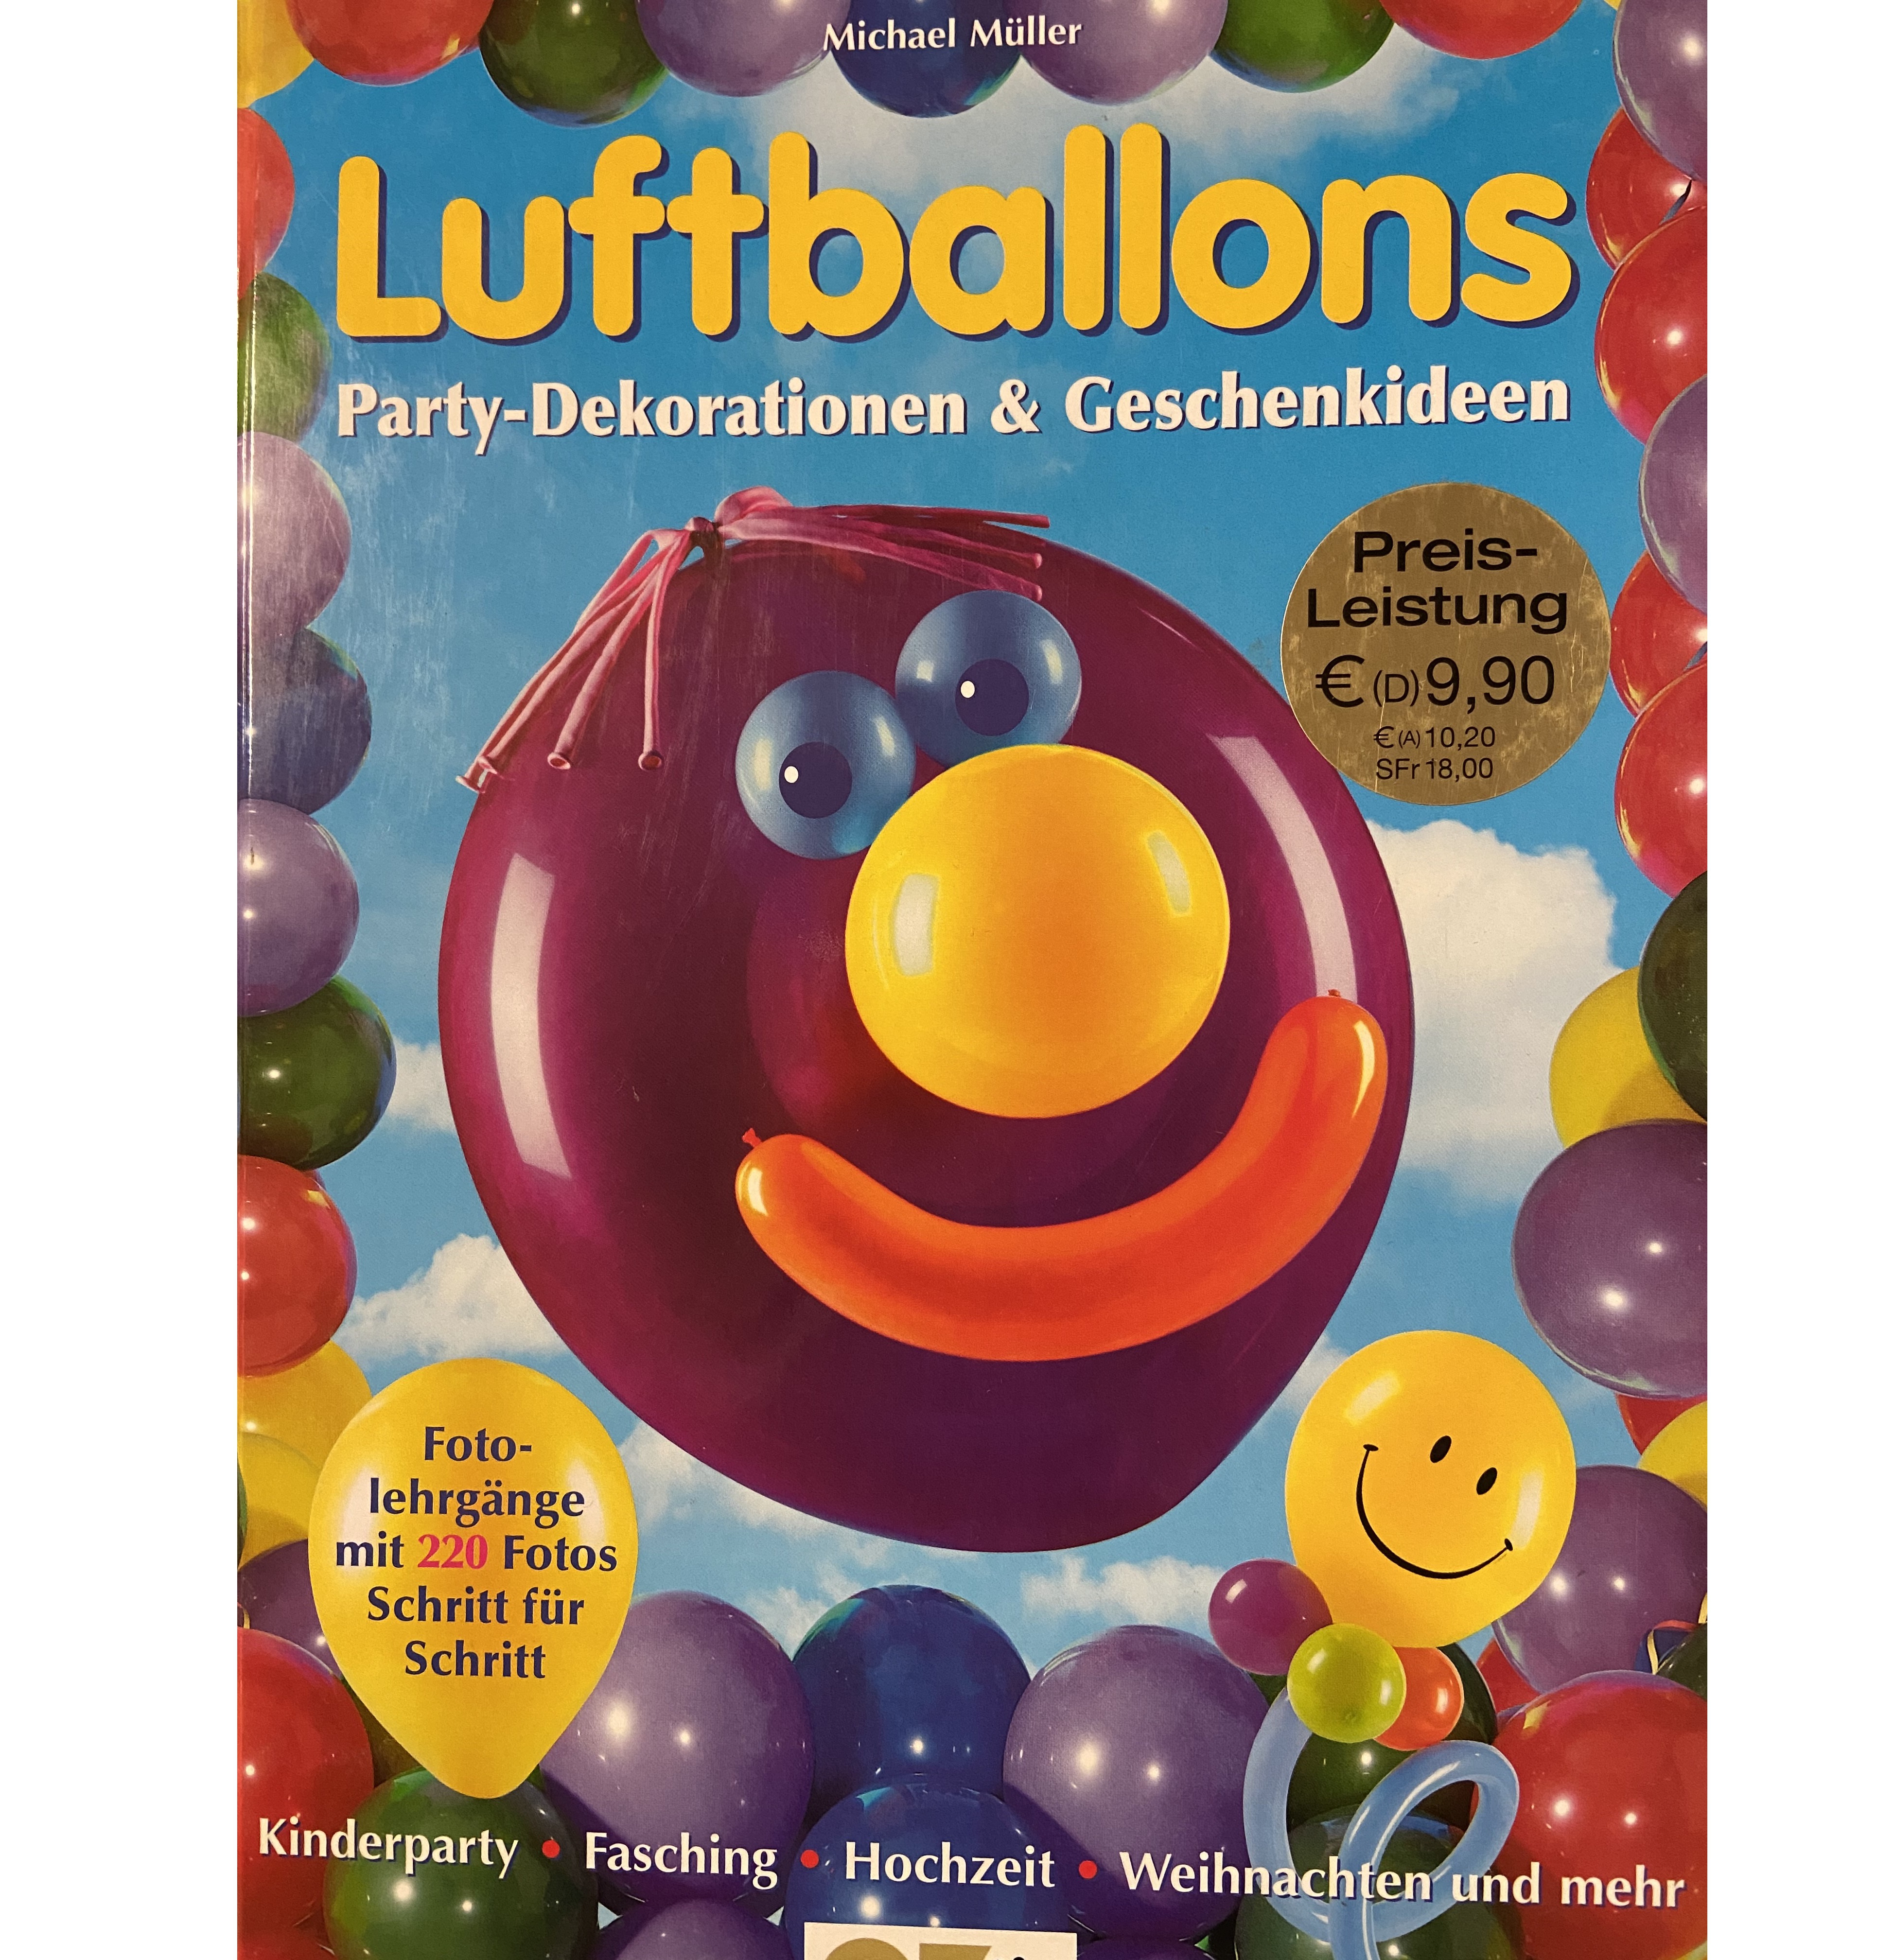 Luftballons Party-Dekorationen & Geschenkideen